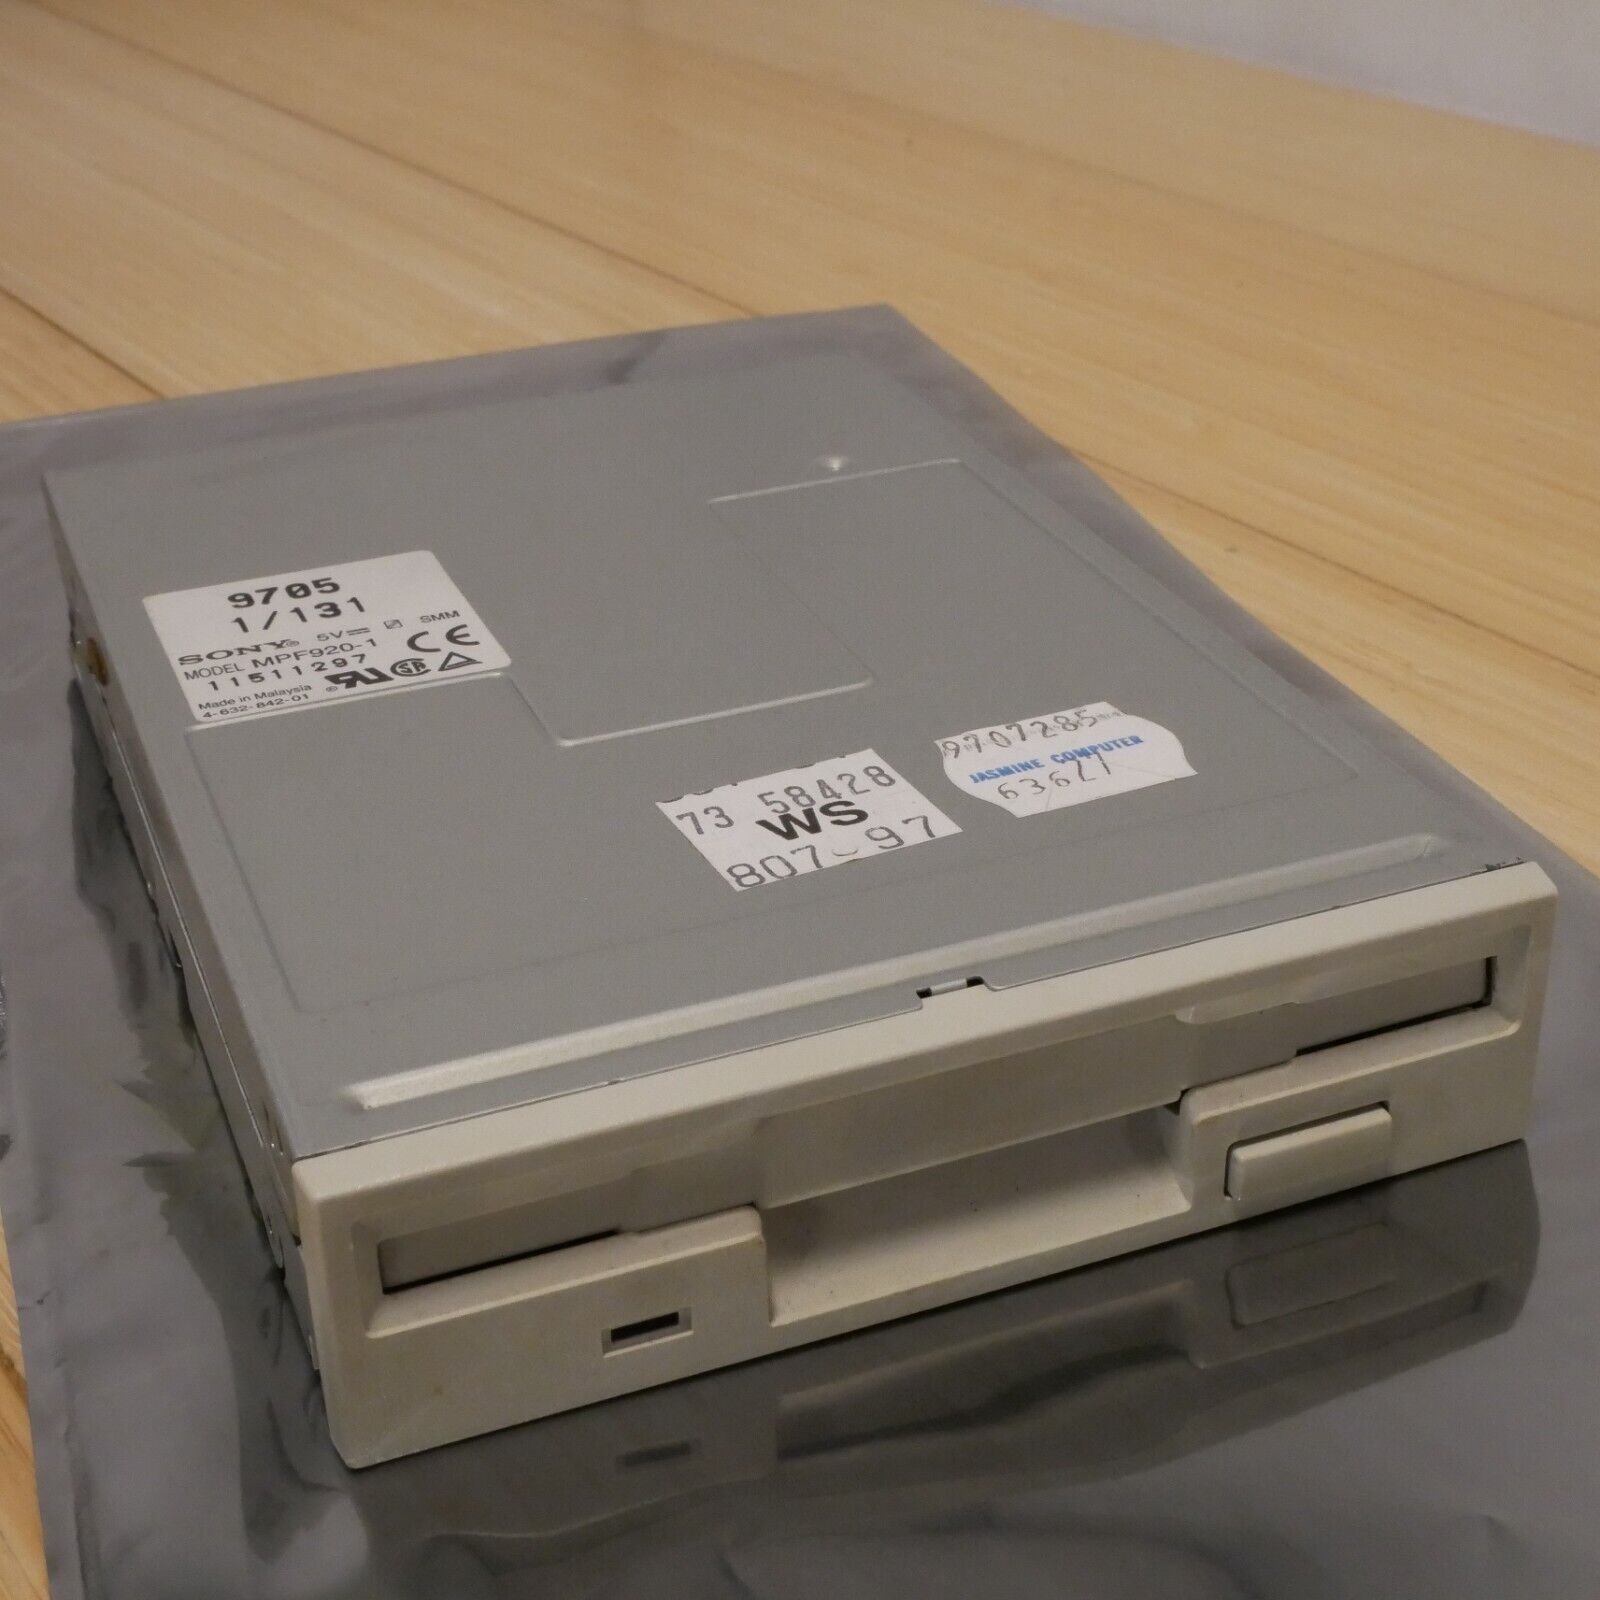 Sony MPF920-1 Internal Desktop 3.5 inch Floppy Disk Drive 1.44MB - Tested 19